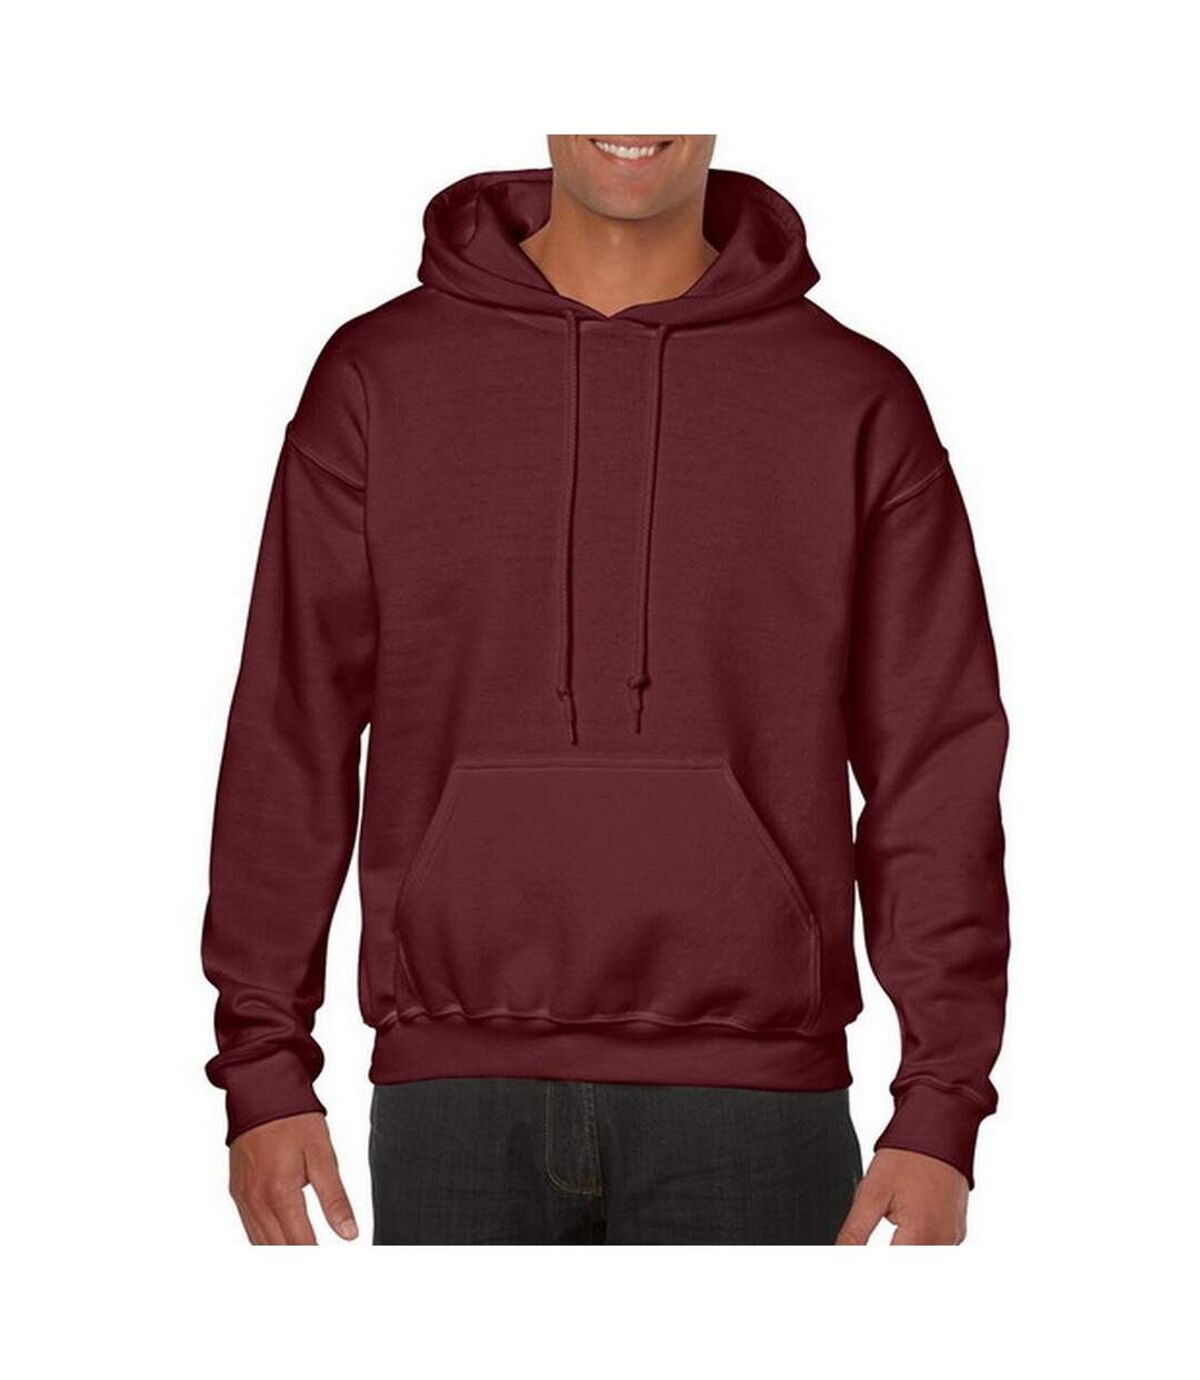 Gildan Heavy Blend Adult Unisex Hooded Sweatshirt/Hoodie (Azalea)